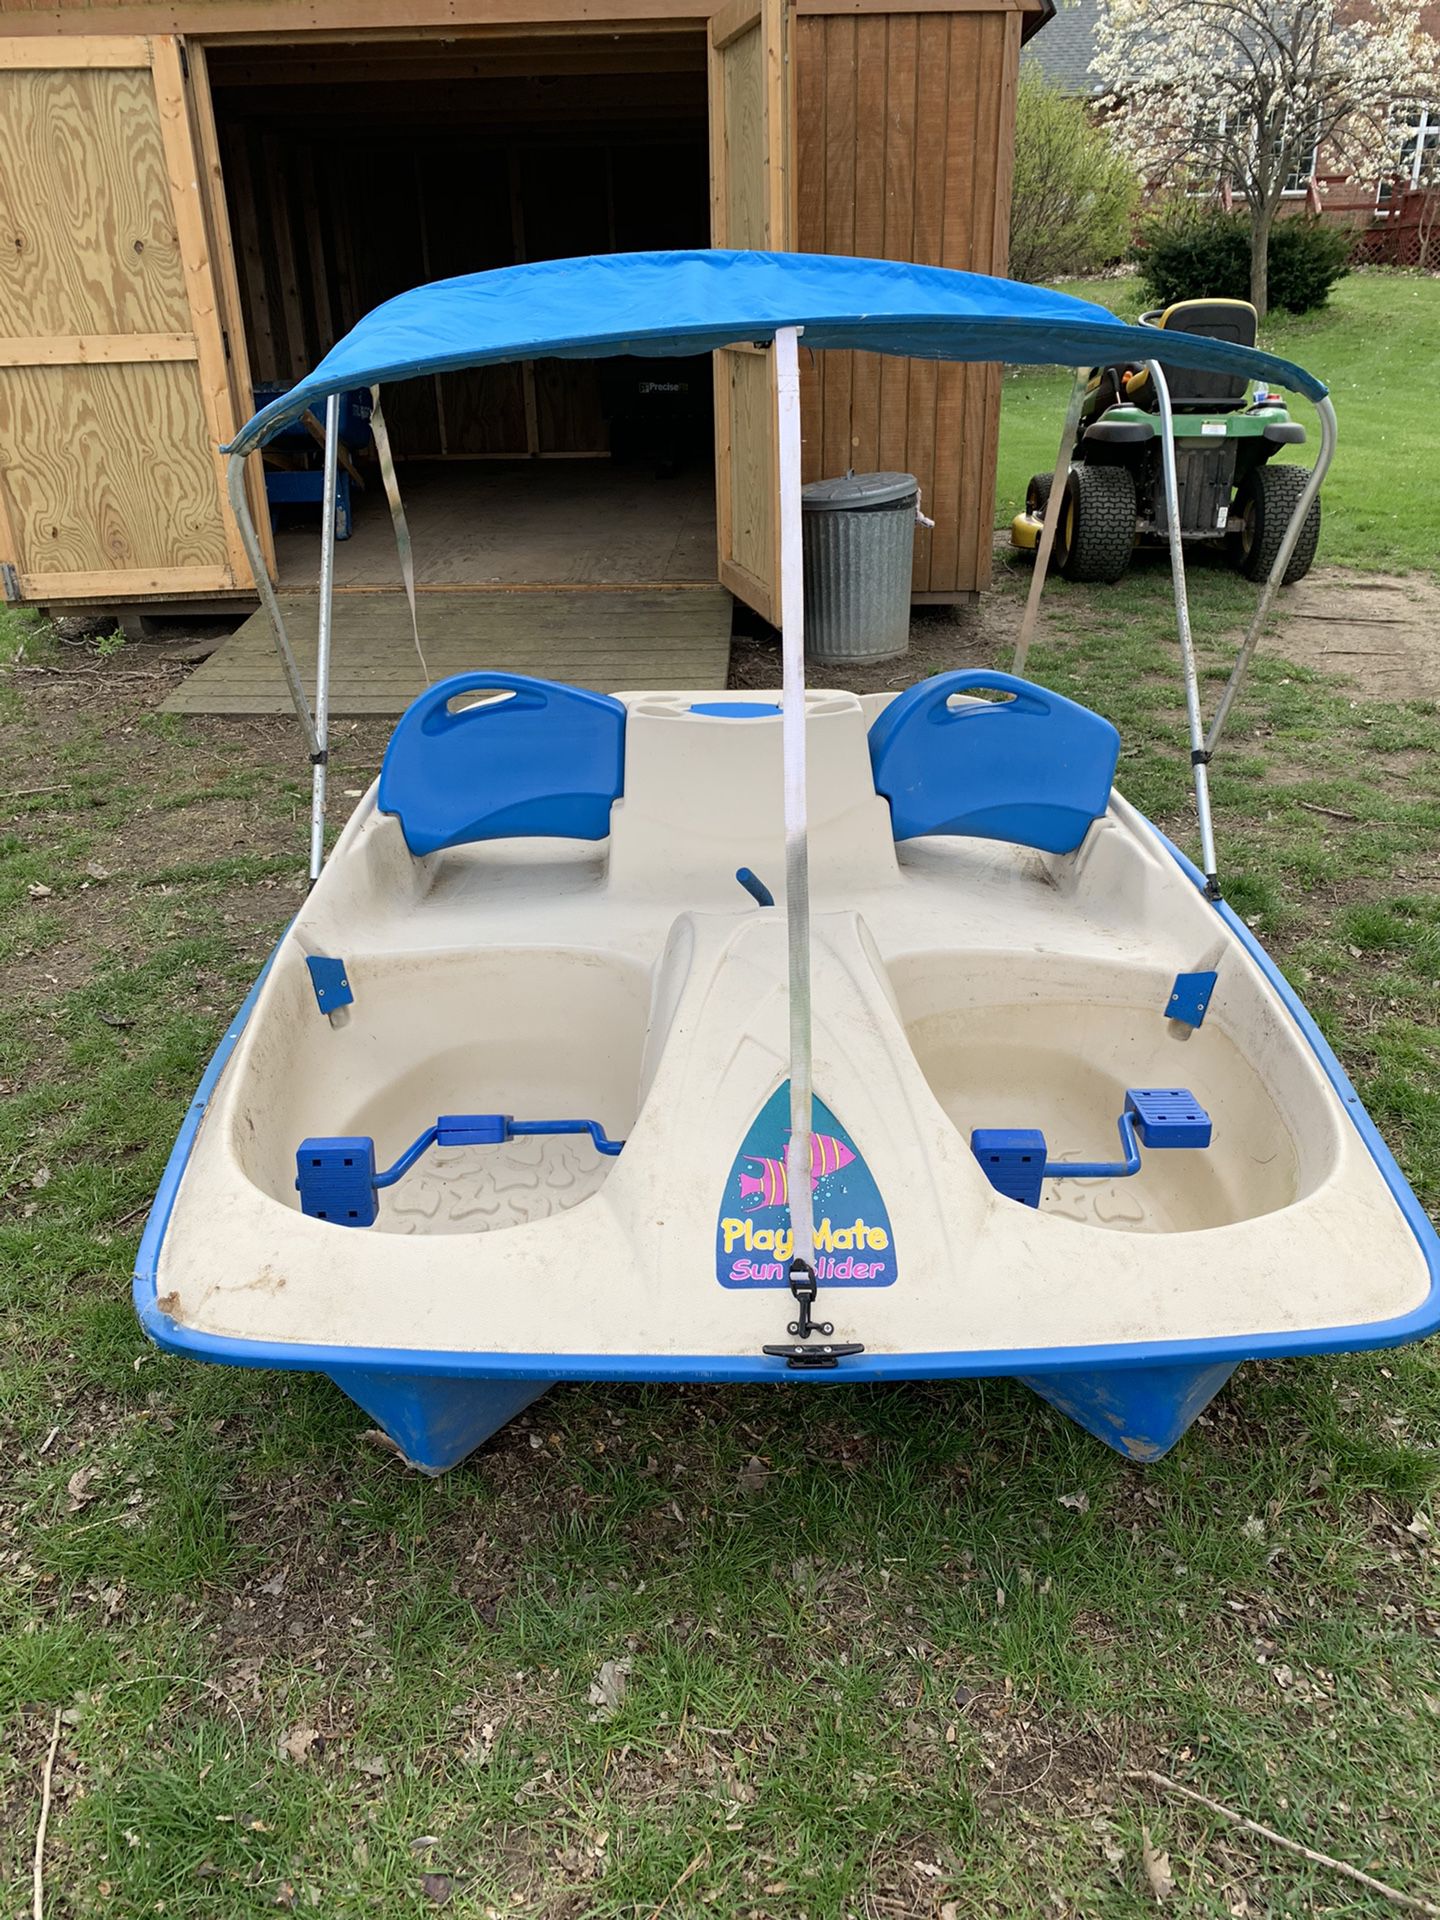 Playmate Sunslider Paddle boat